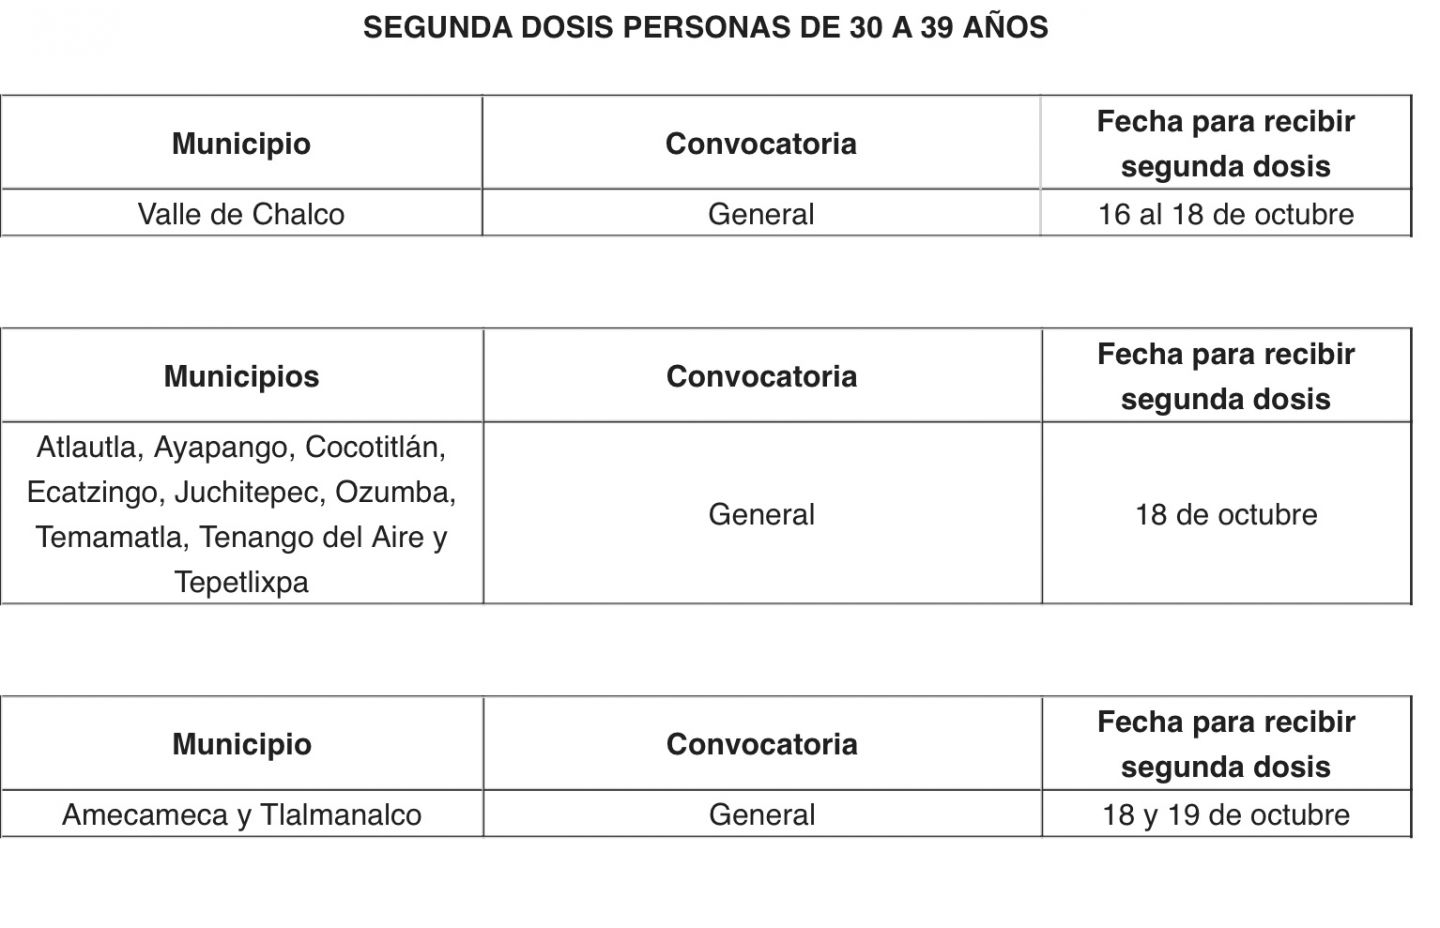  Anuncian segunda dosis de vacuna contra COVID-19 para personas de 30 a 39 años en 12 municipios mexiquenses 